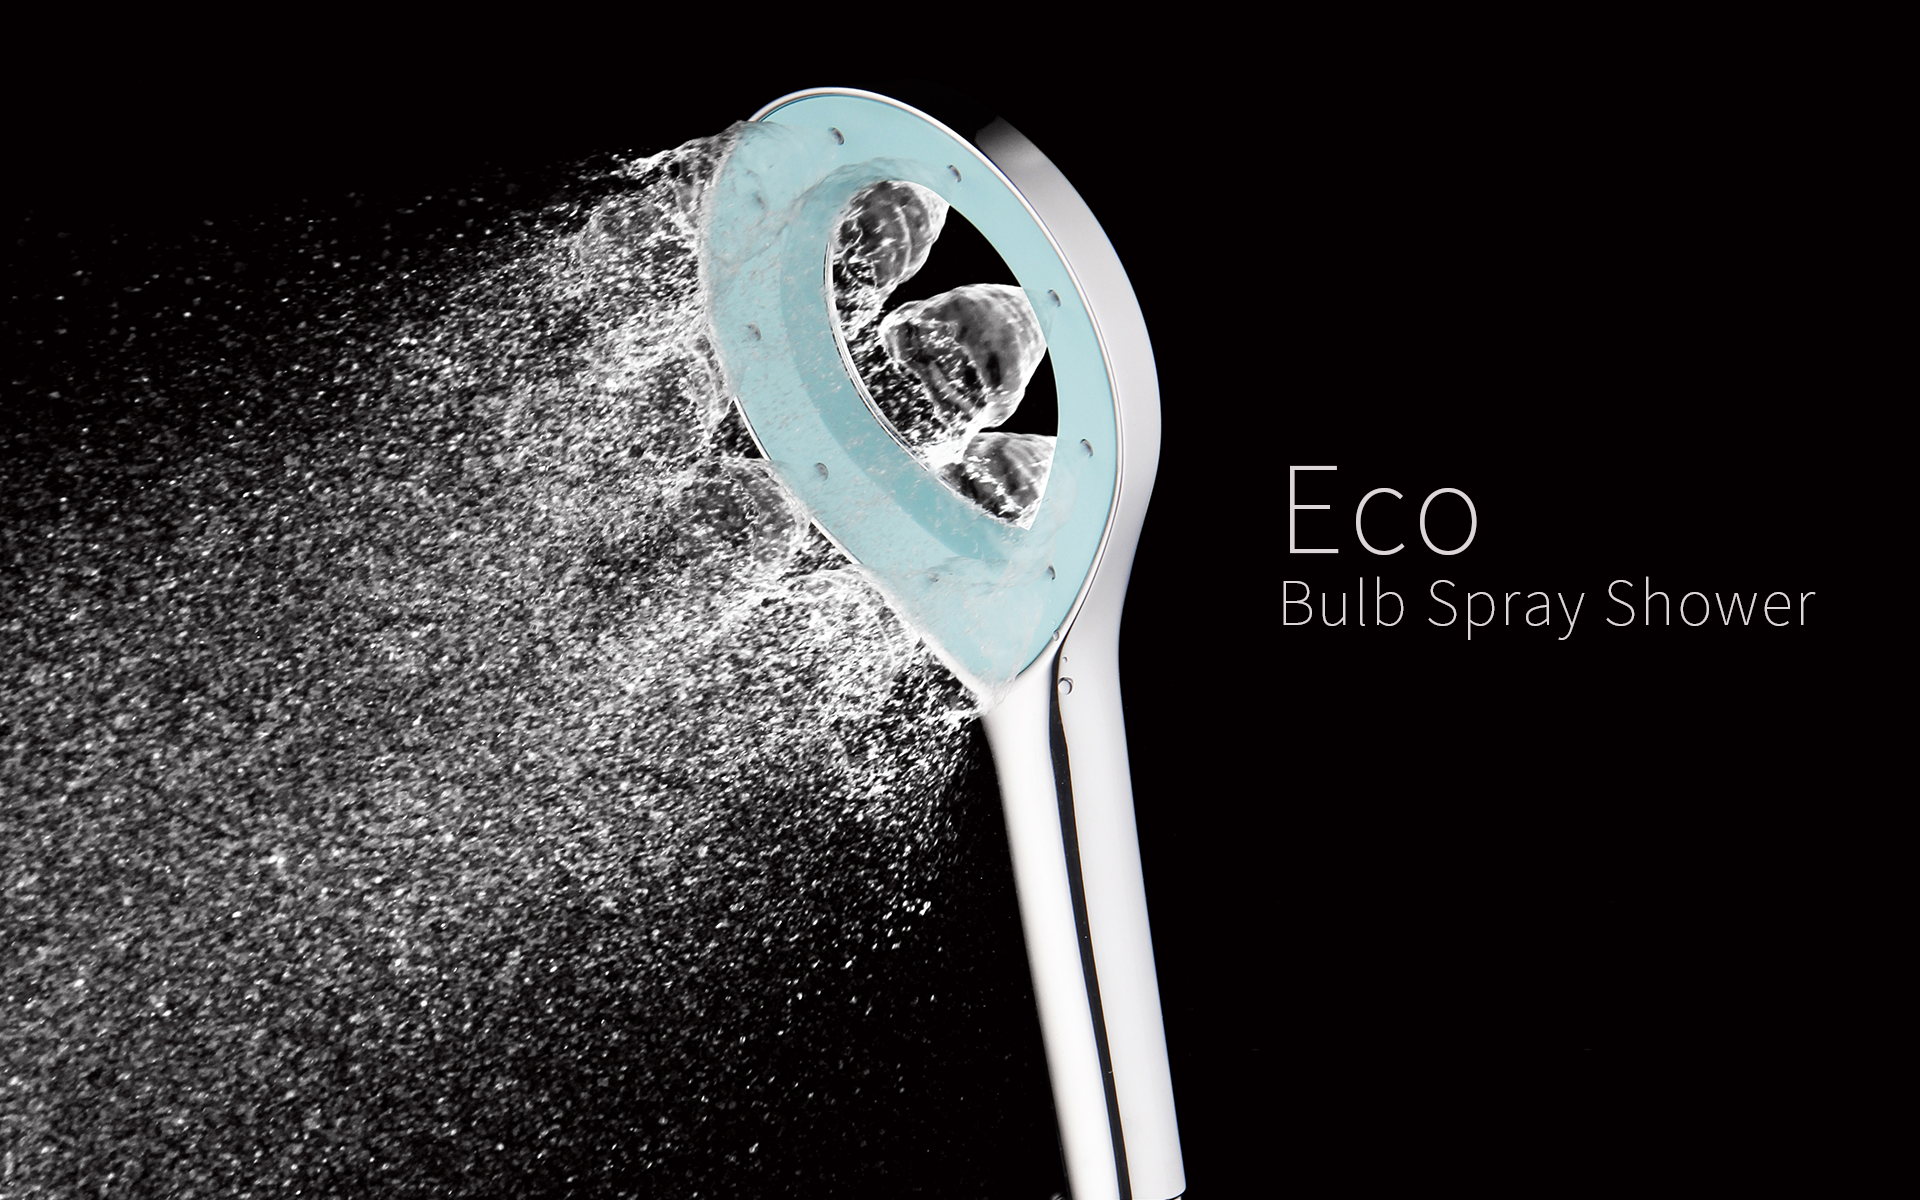 Eco bulb spray shower Storm spay handshower Water-saving